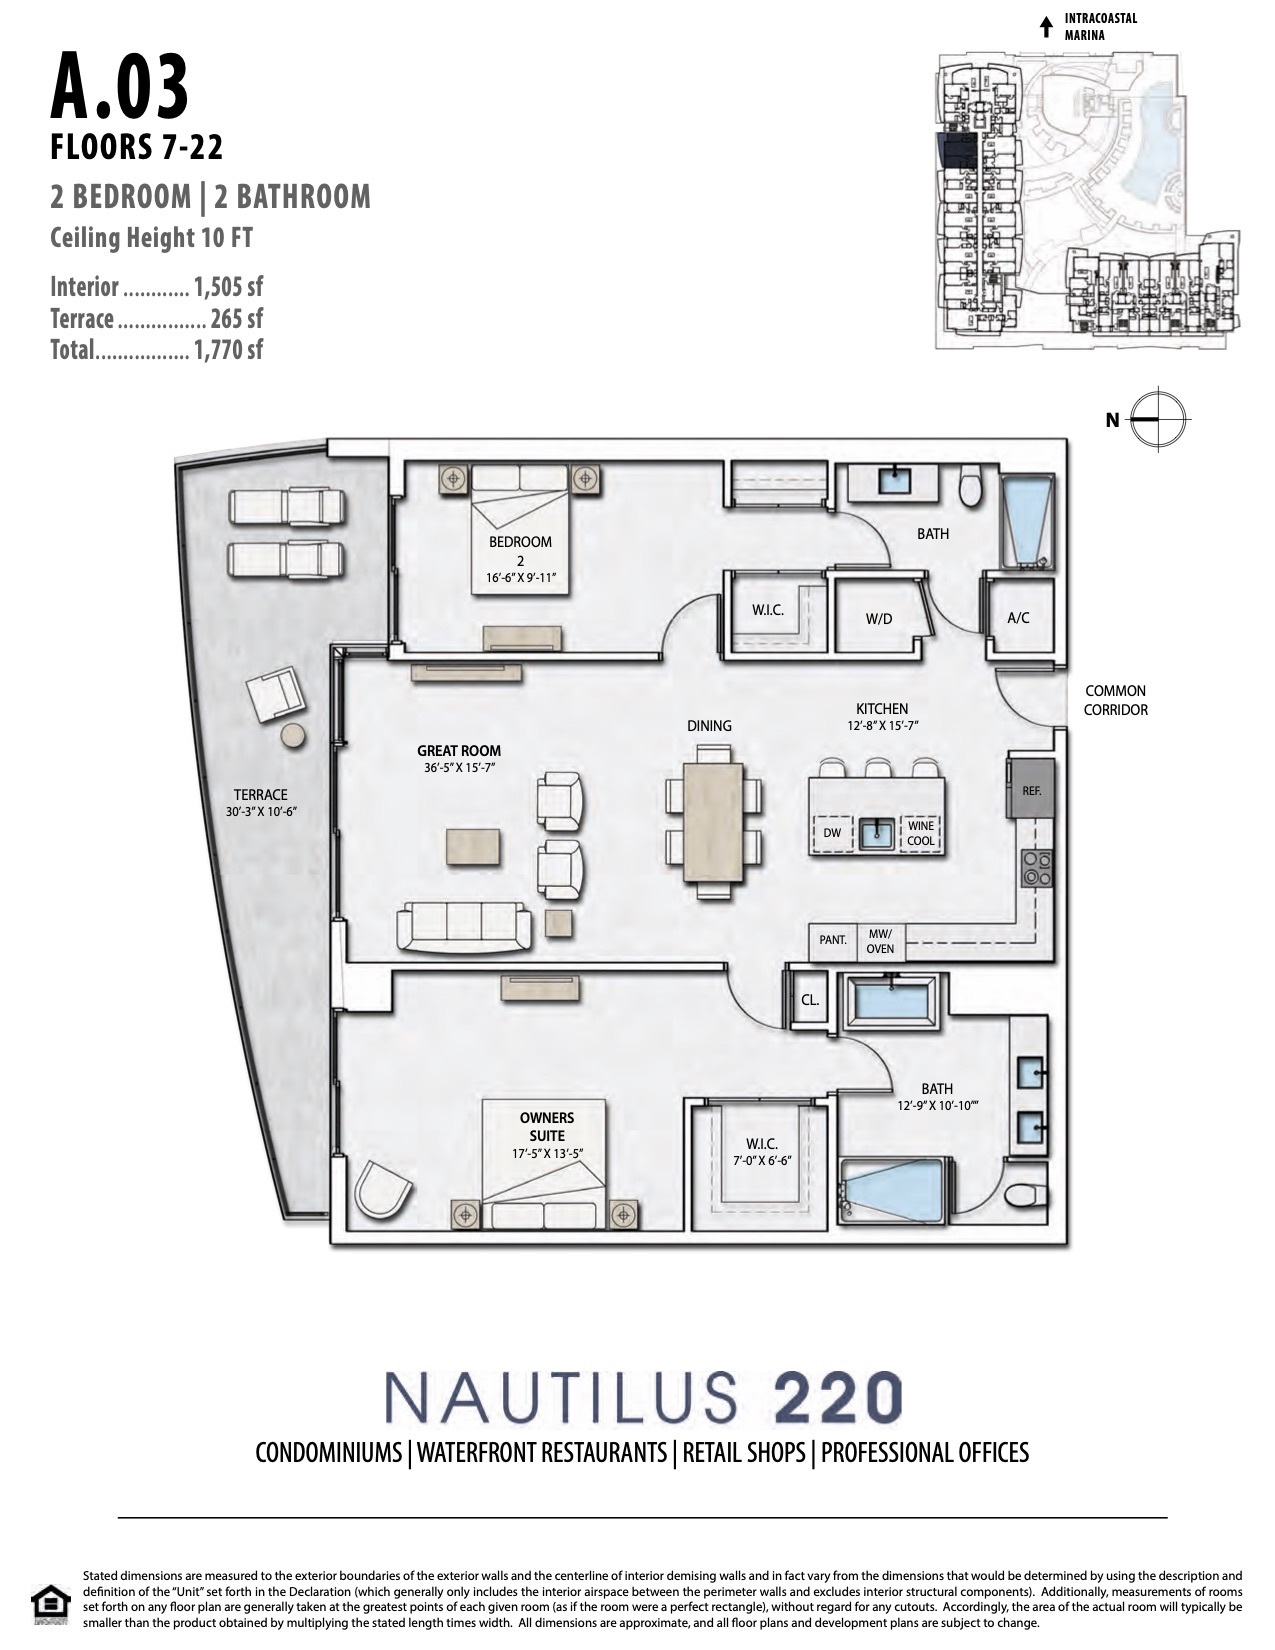 Floor Plan for Nautilus 220 Floorplans, A.03